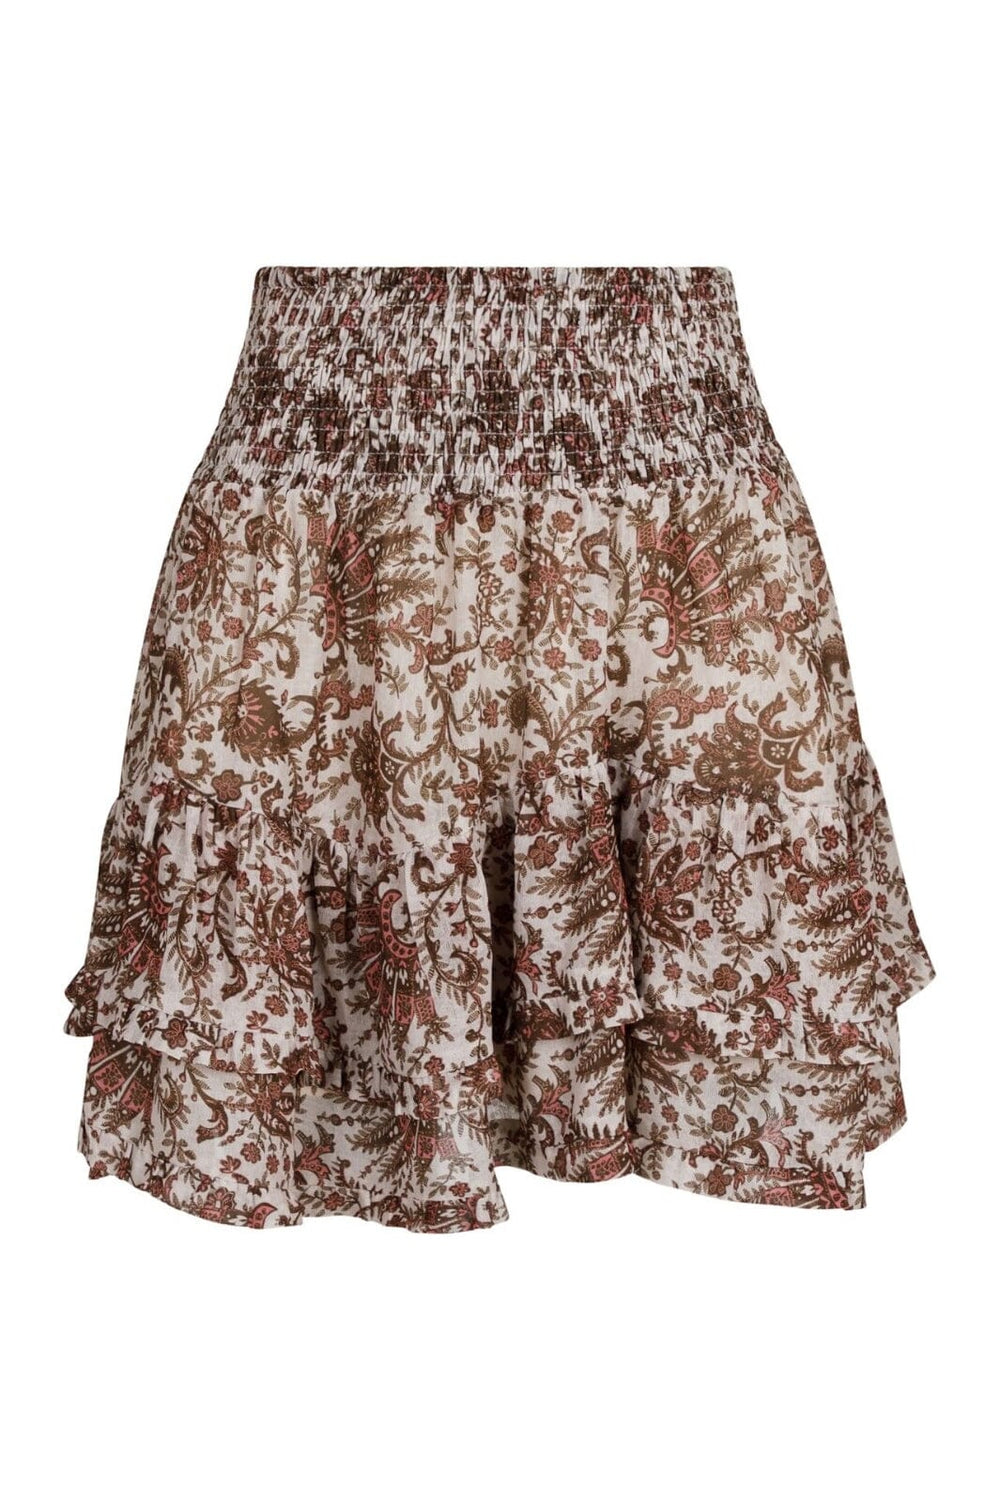 Neo Noir - Tana Vintage Paisley Skirt - Beige Nederdele 